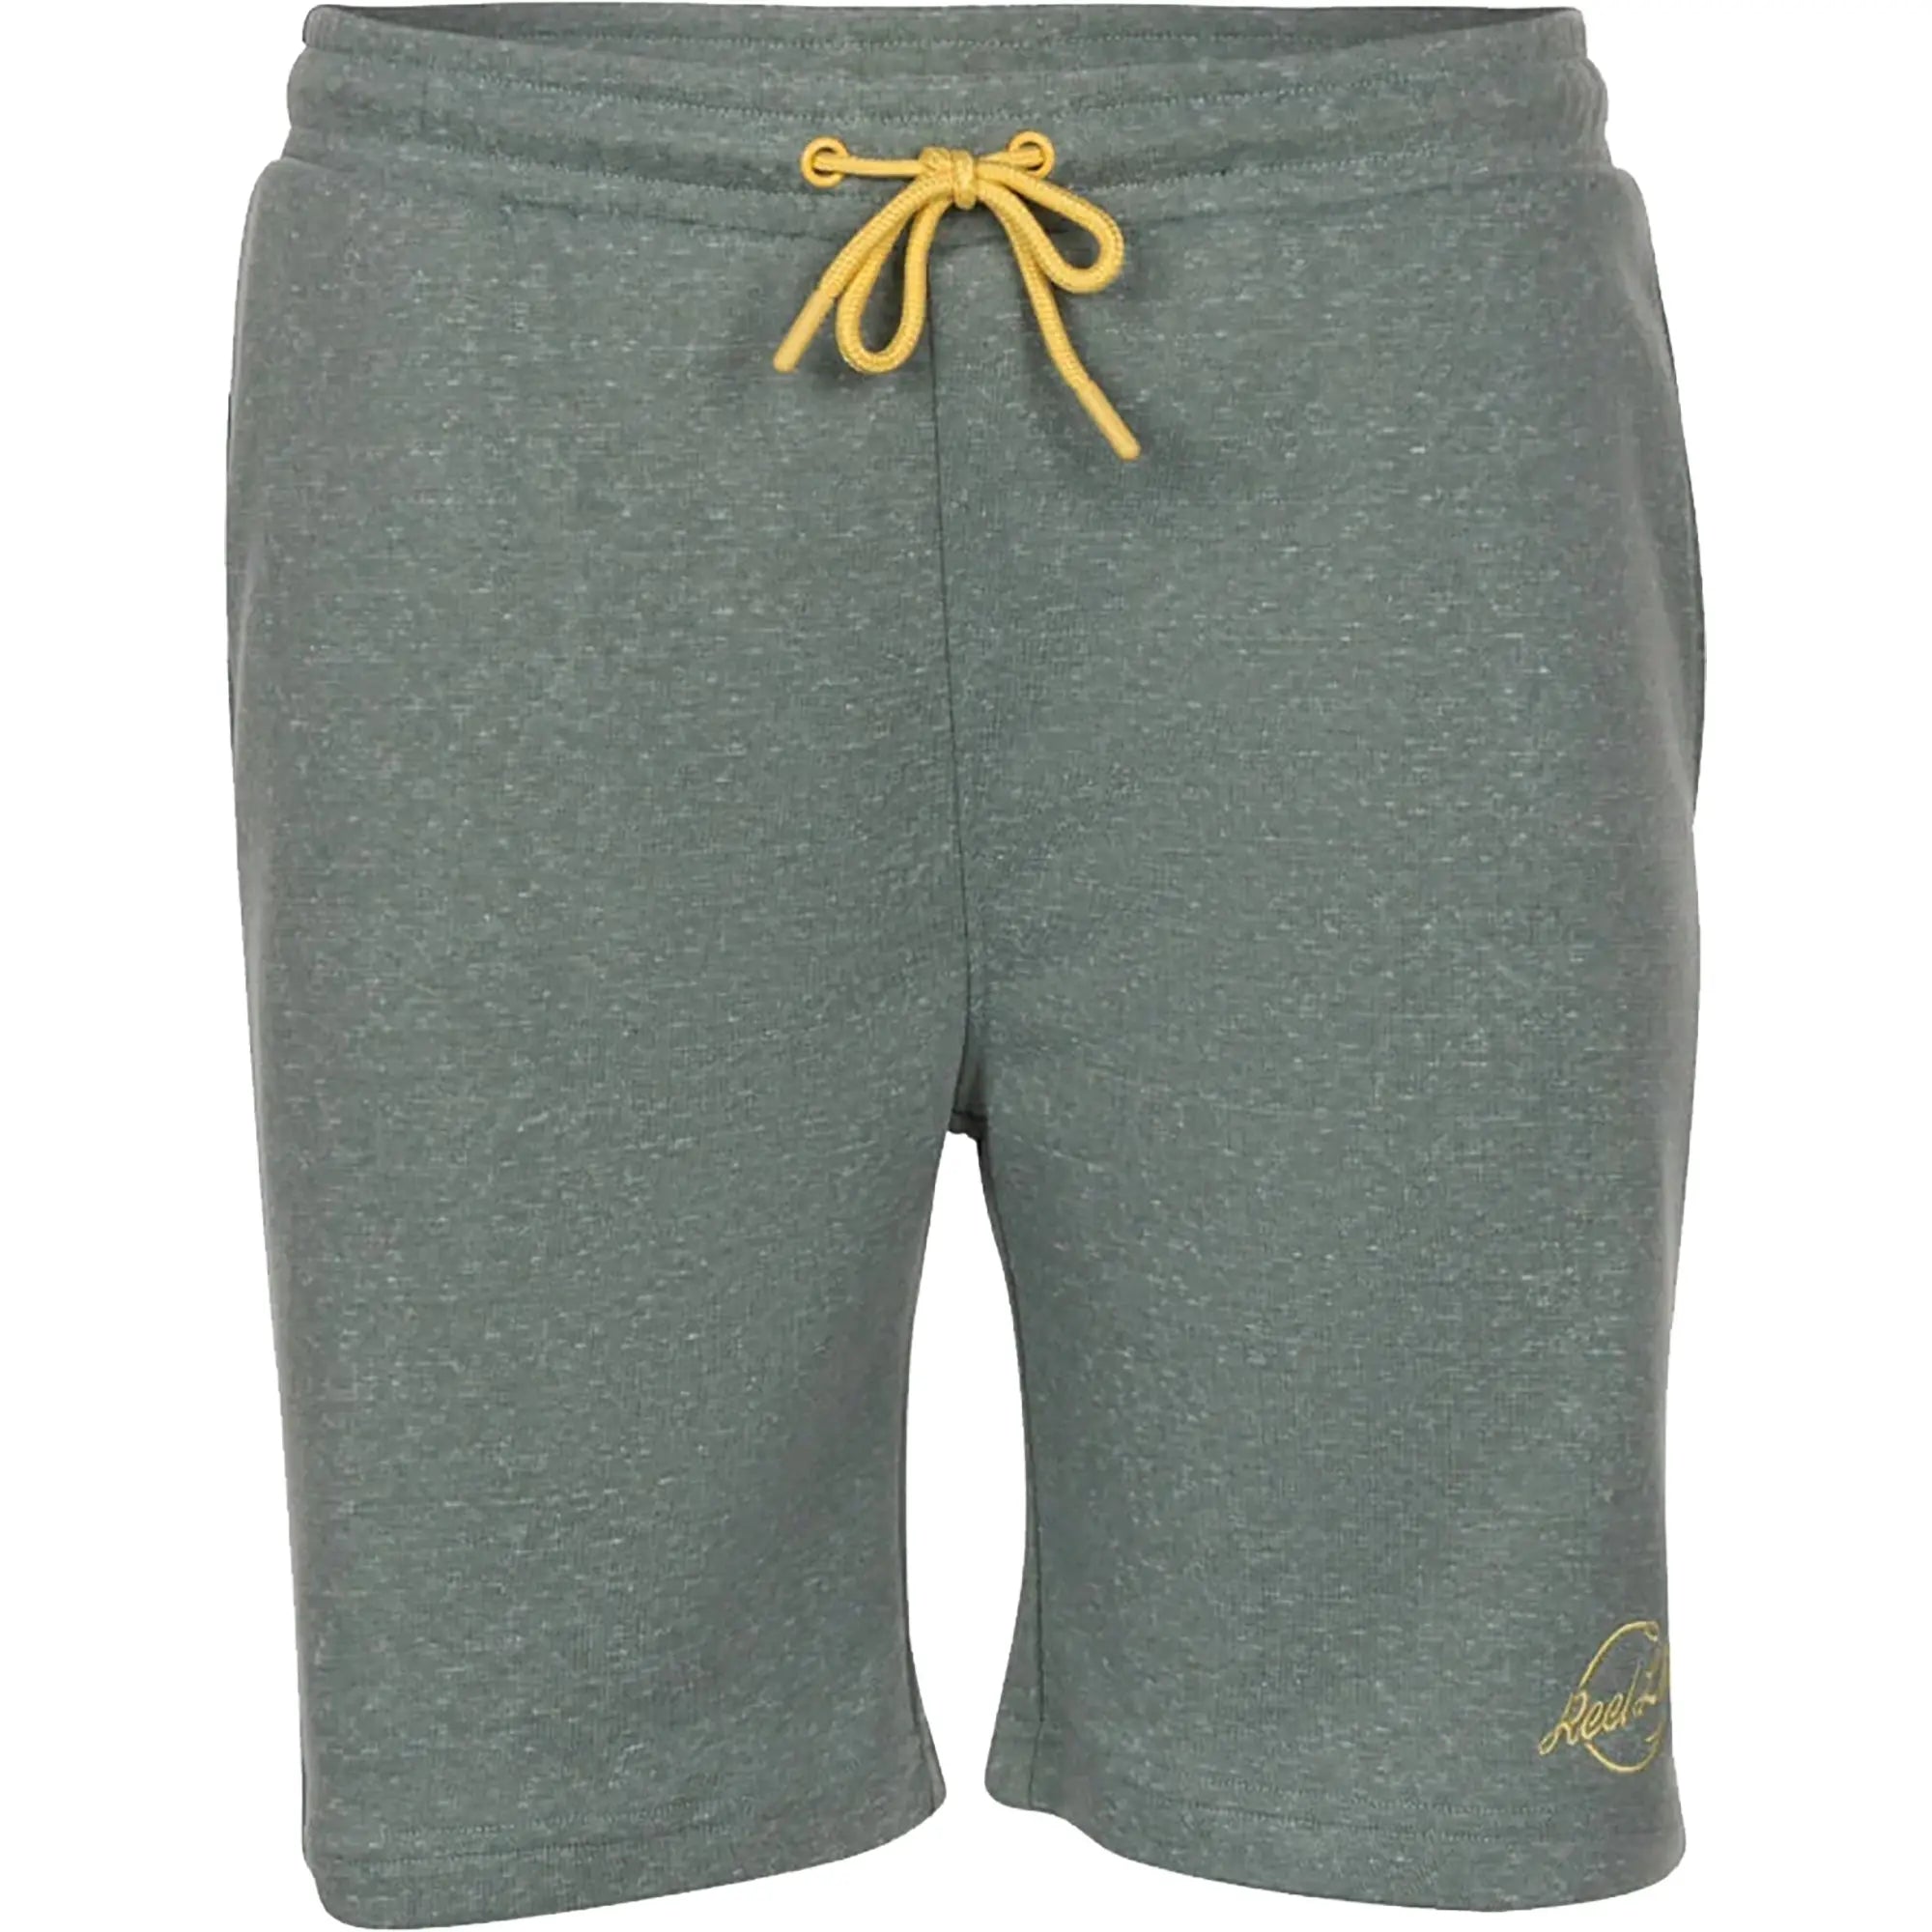 Reel Life Beachcomber Knit Shorts - Lily Pad Reel Life